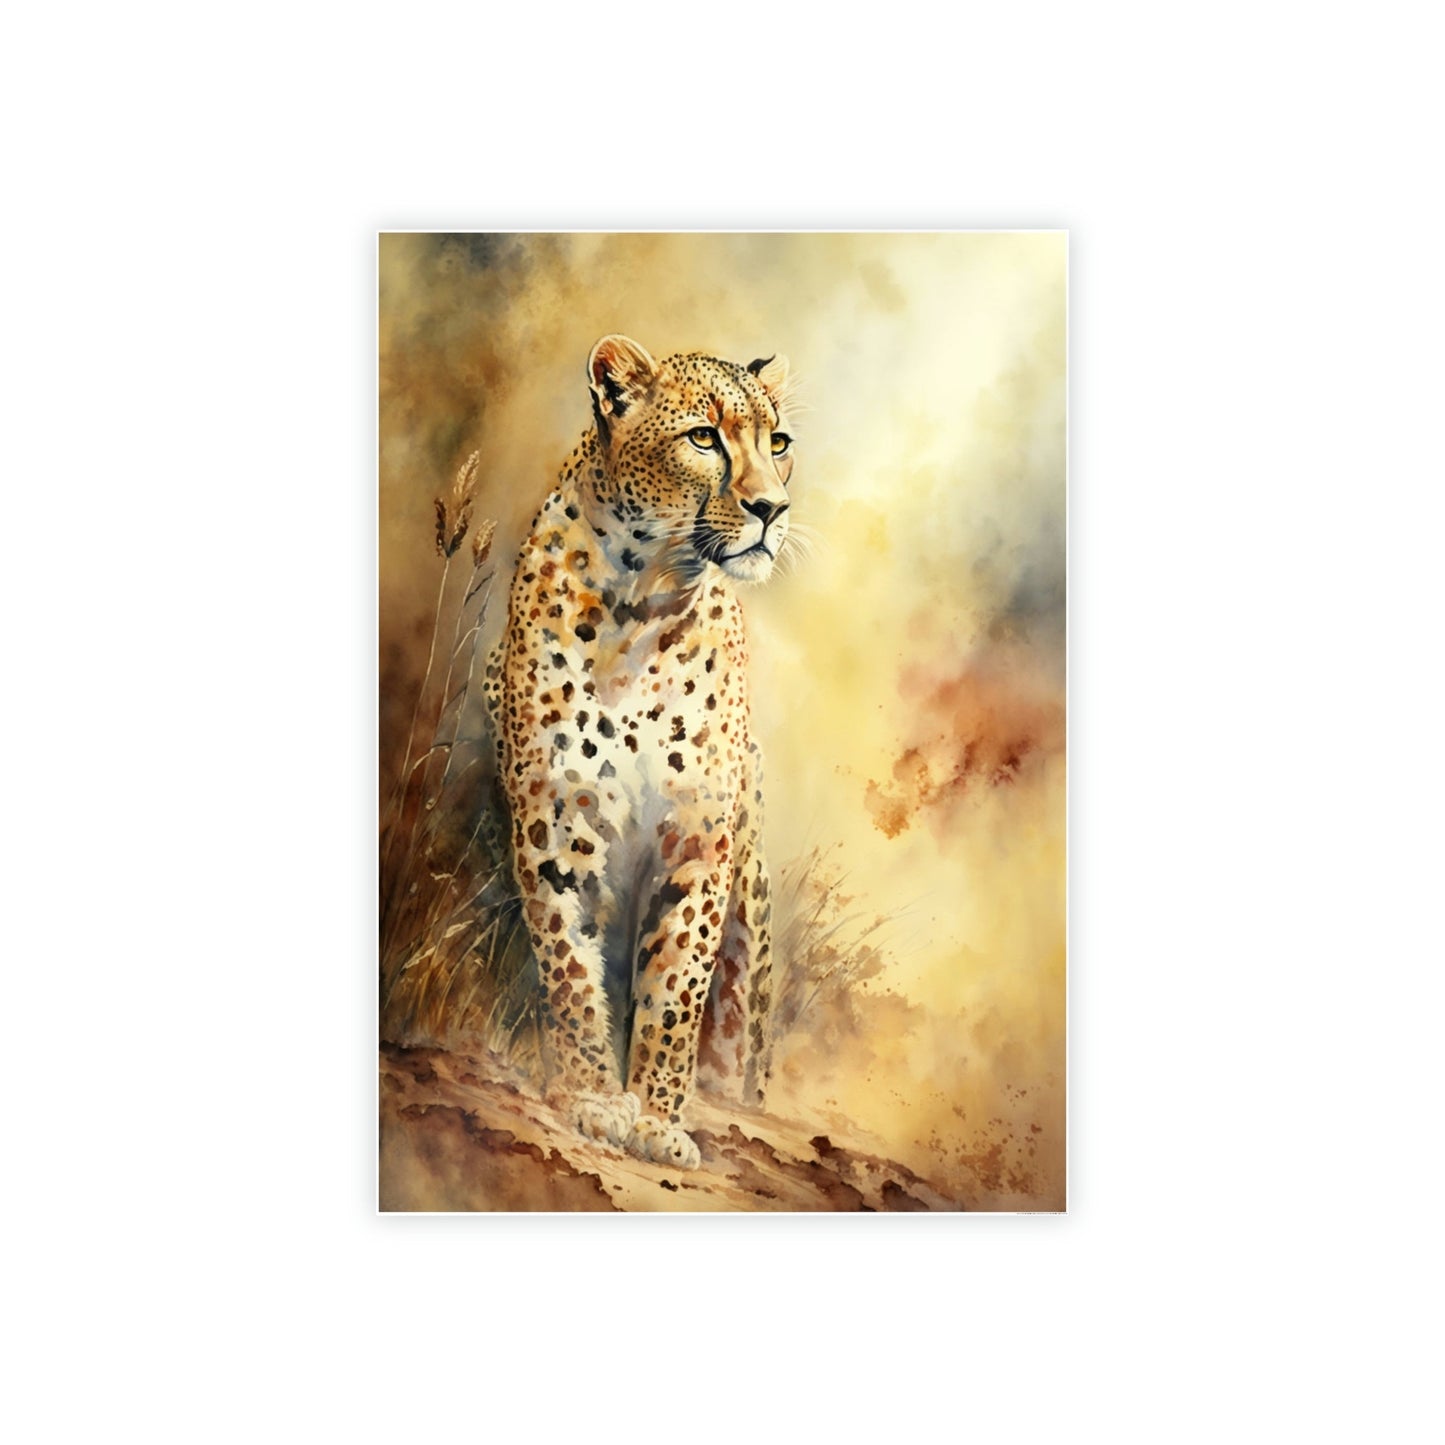 Untamed Beauty: Cheetah in Natural Canvas Wall Art